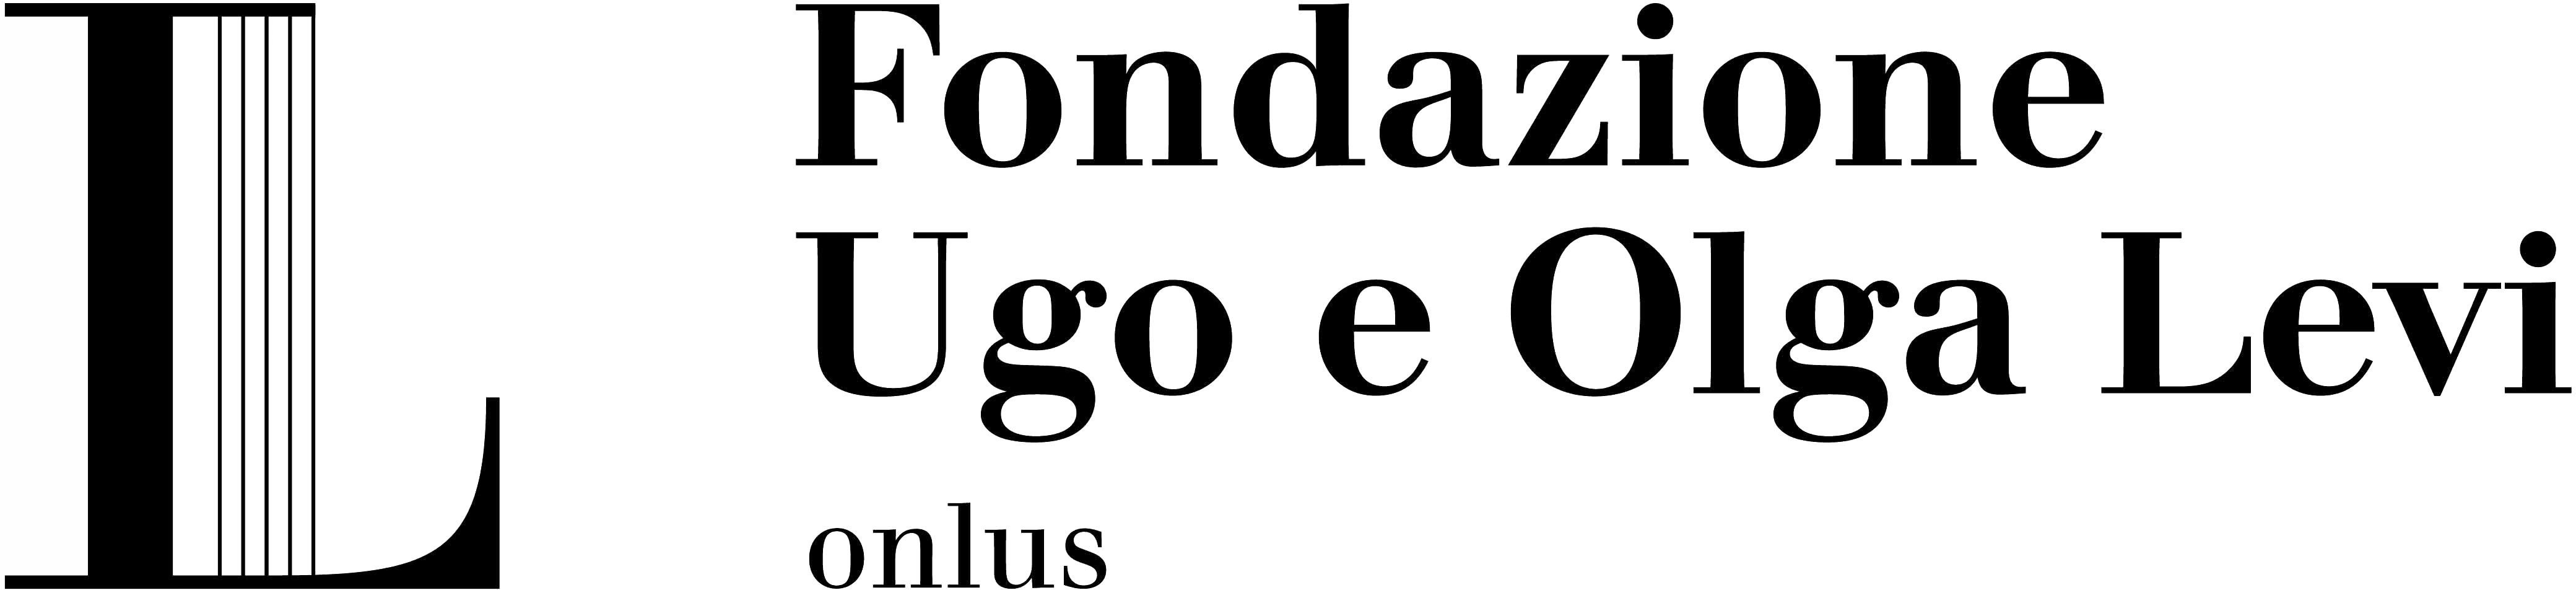 Fondazione Ugo Olga Levi logo